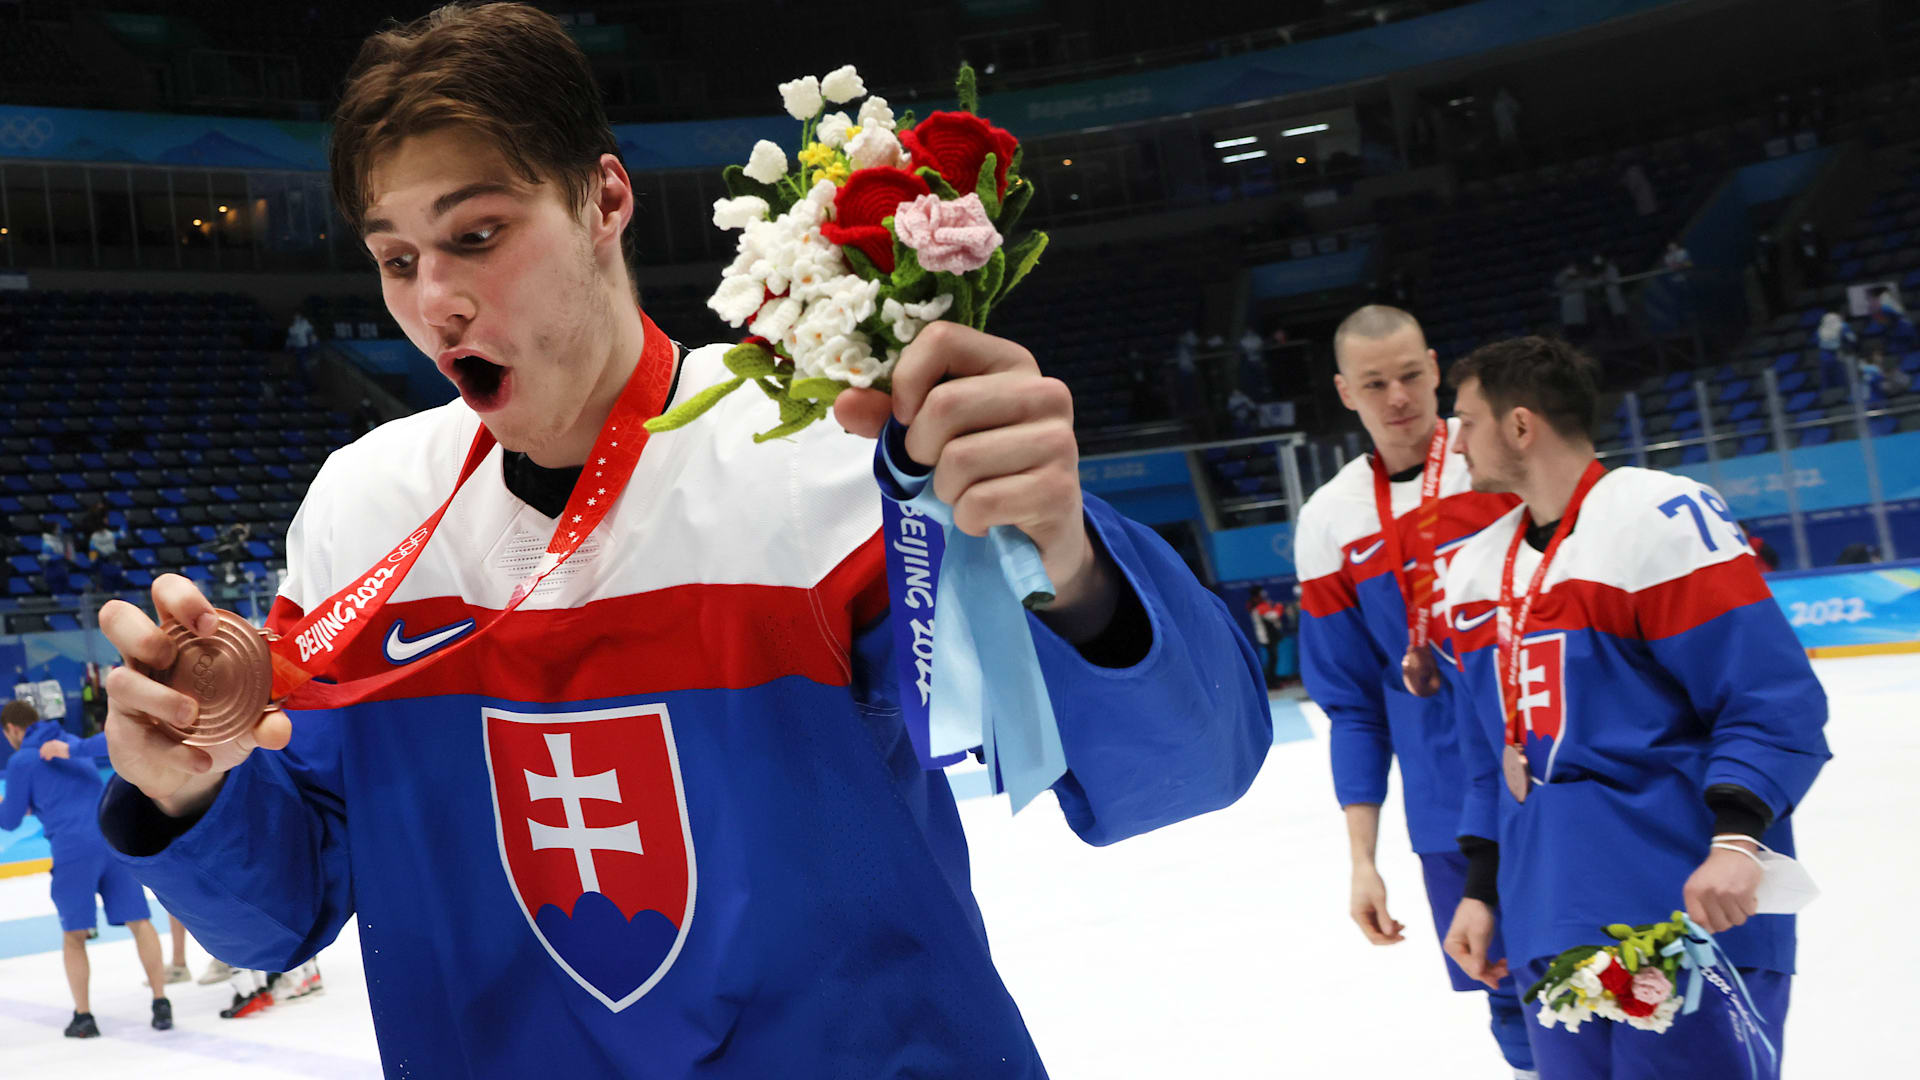 At 17 years old, Slovakia's Juraj Slafkovsky is taking the Olympics by storm